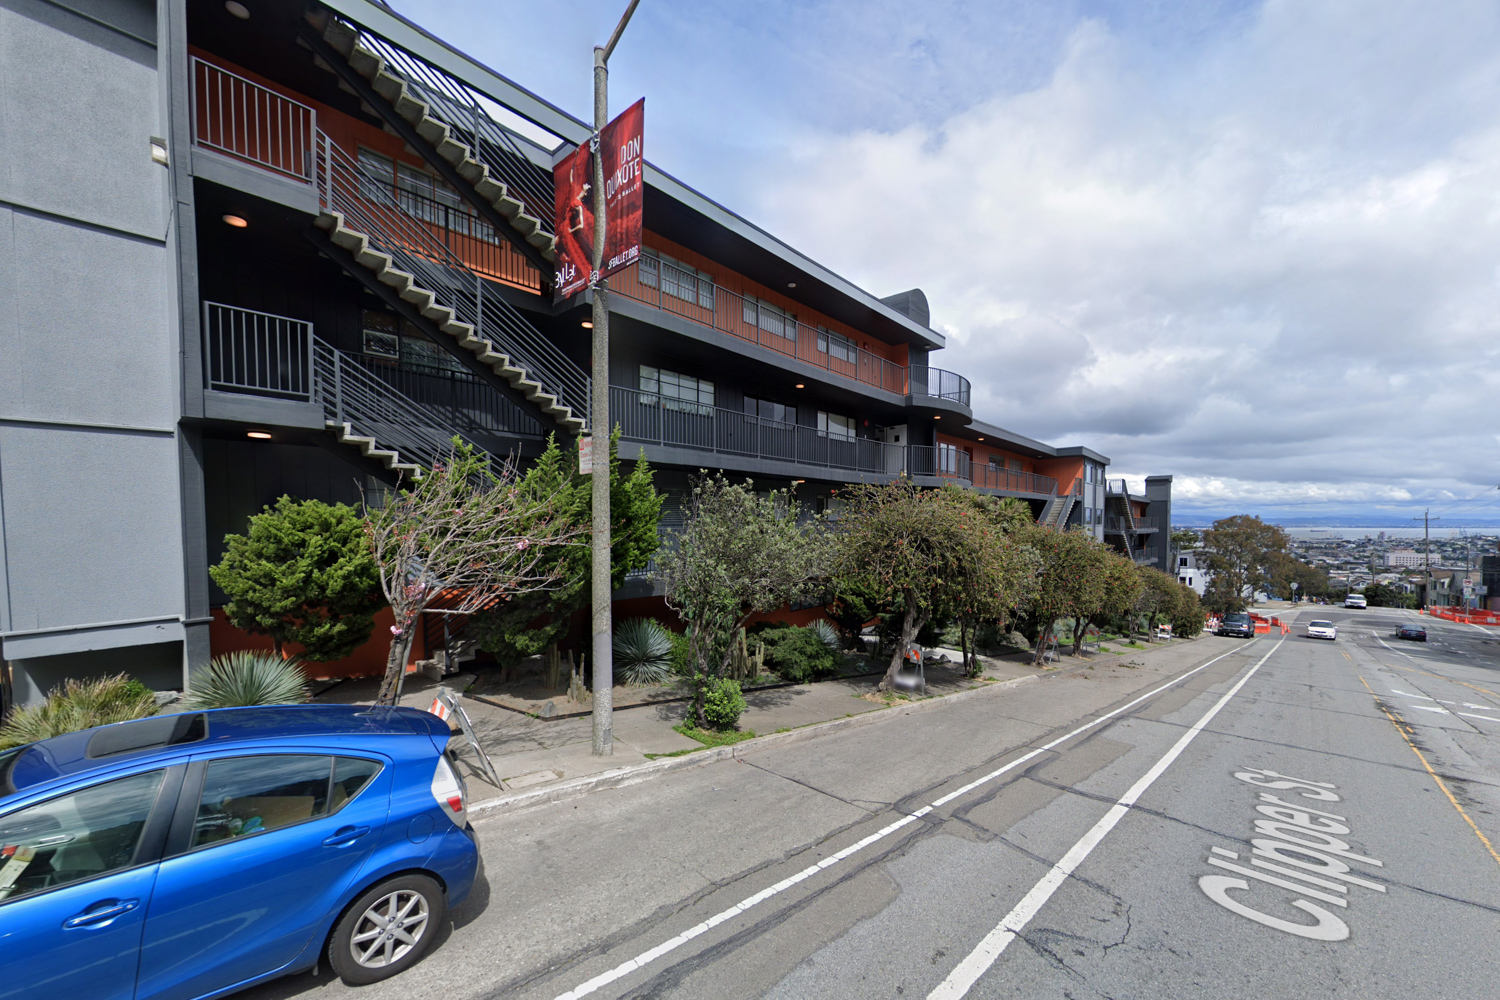 660 Clipper Street, via Google Street View